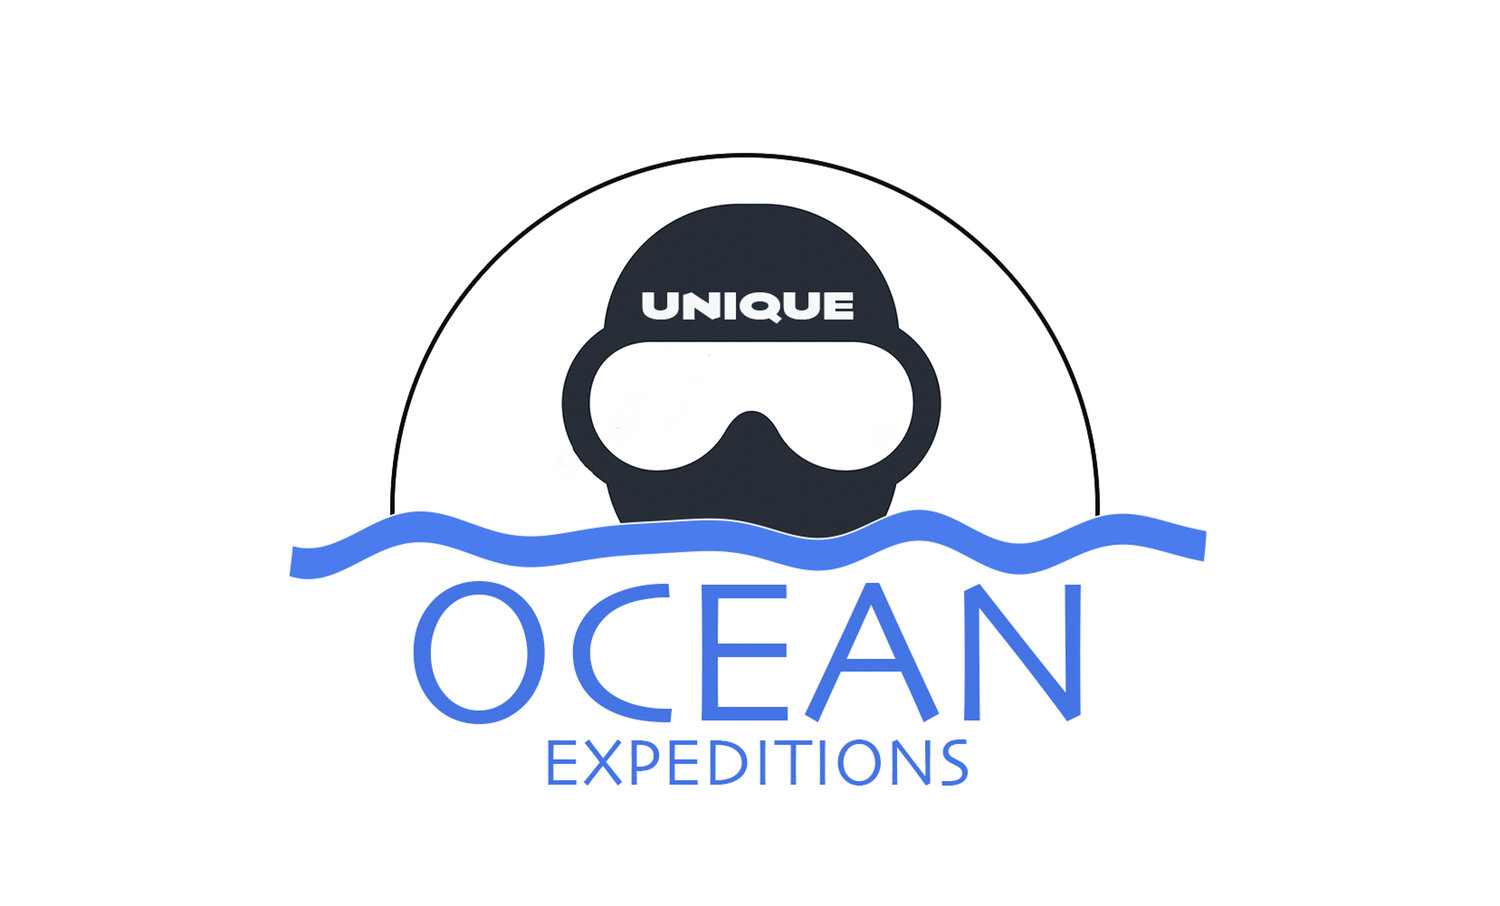 UNIQUE OCEAN EXPEDITIONS